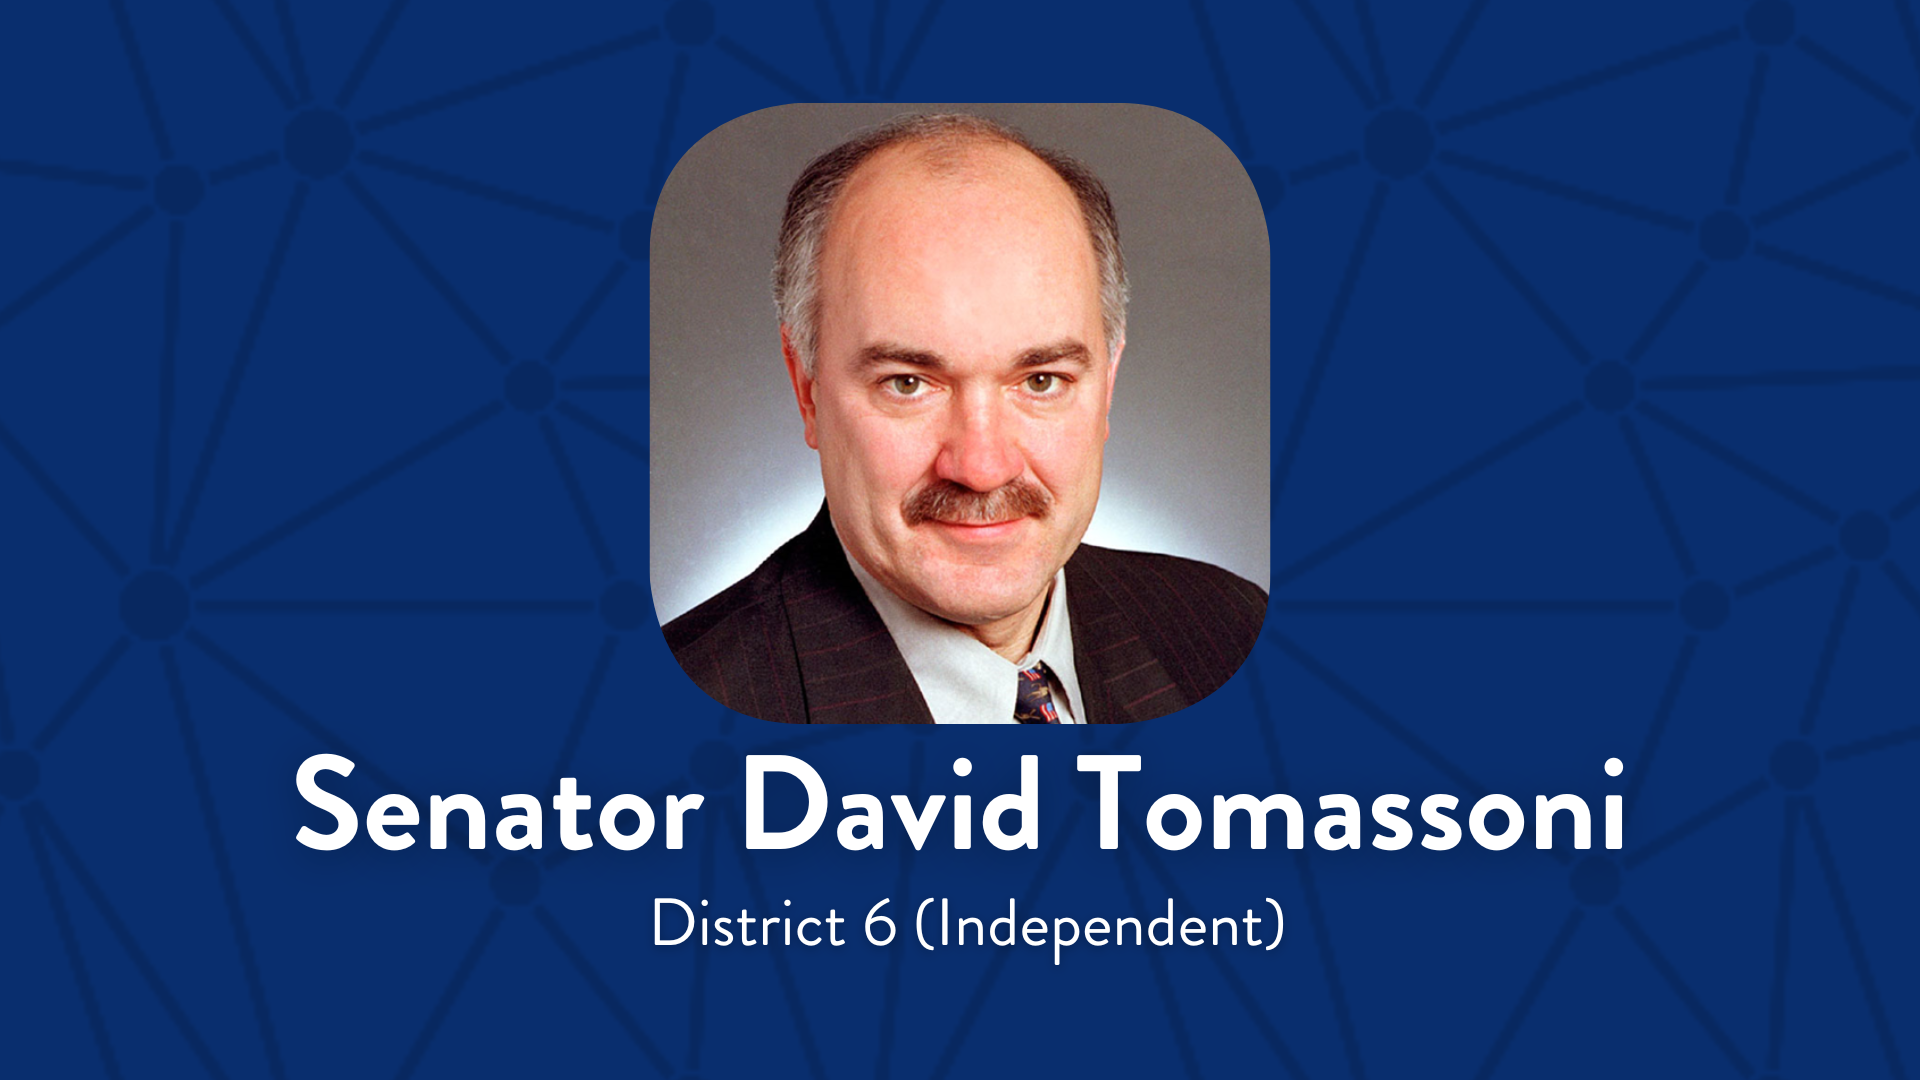 Senator David Tomassoni